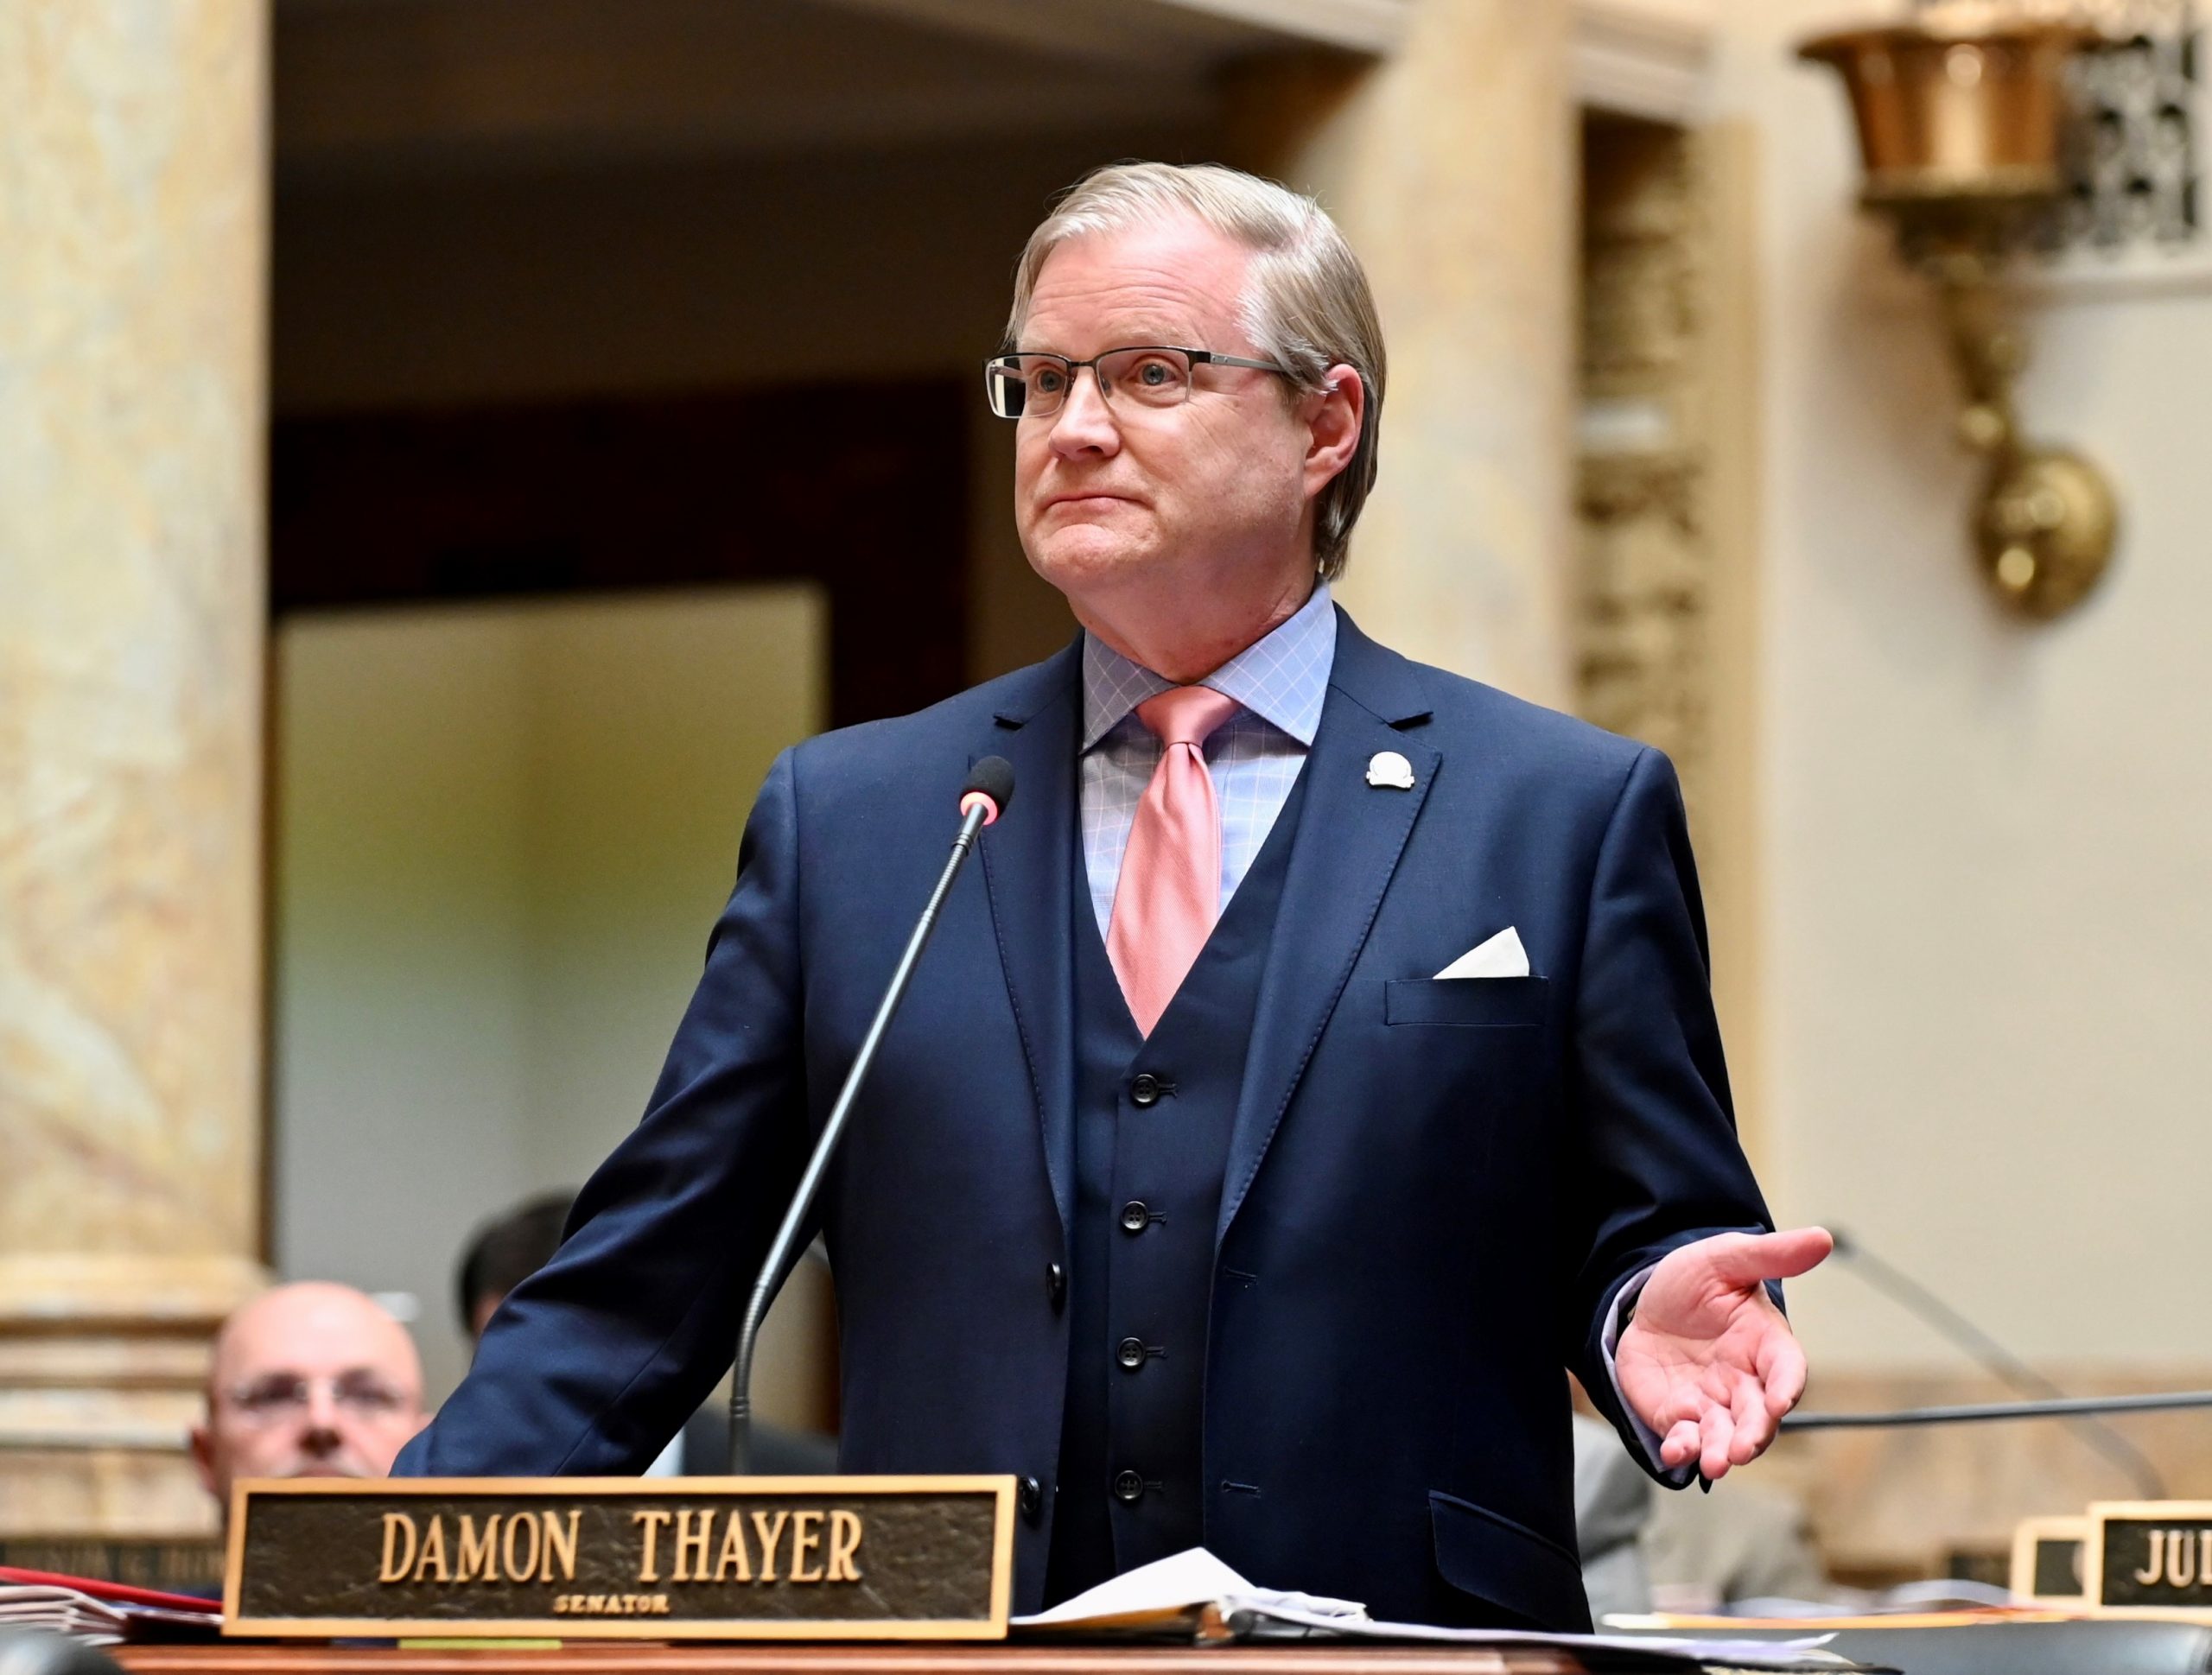 Senator Damon Thayer Issues Statement on Senate’s Sports Gaming Approval